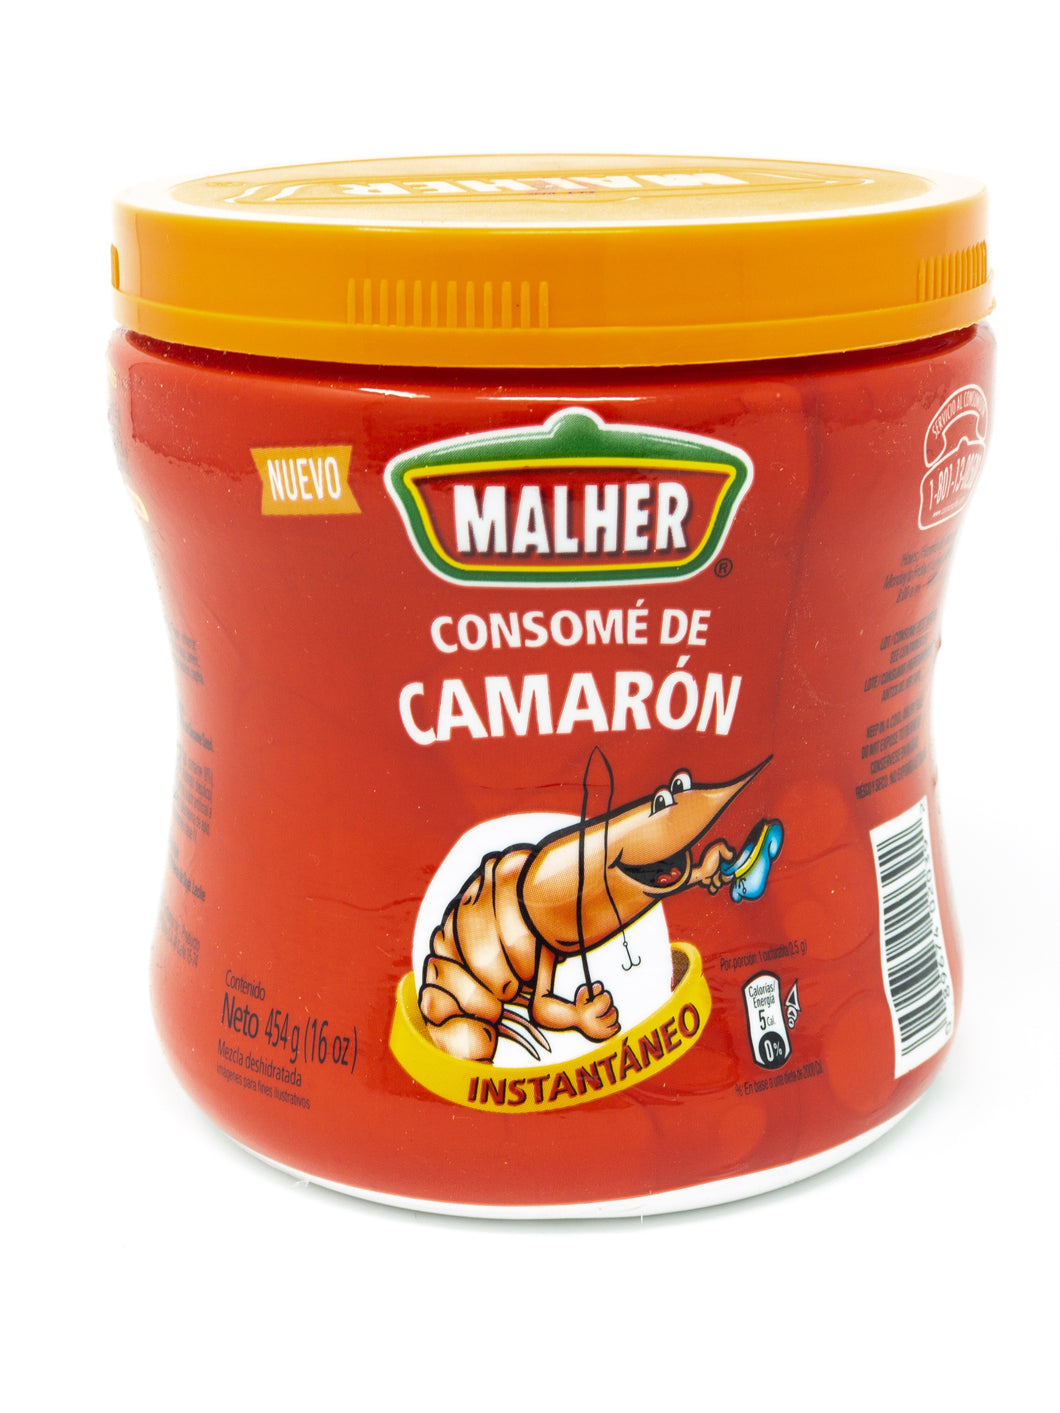 Malher Shrimp Bouillon 7 oz - Consome de Camaron (Pack of 6